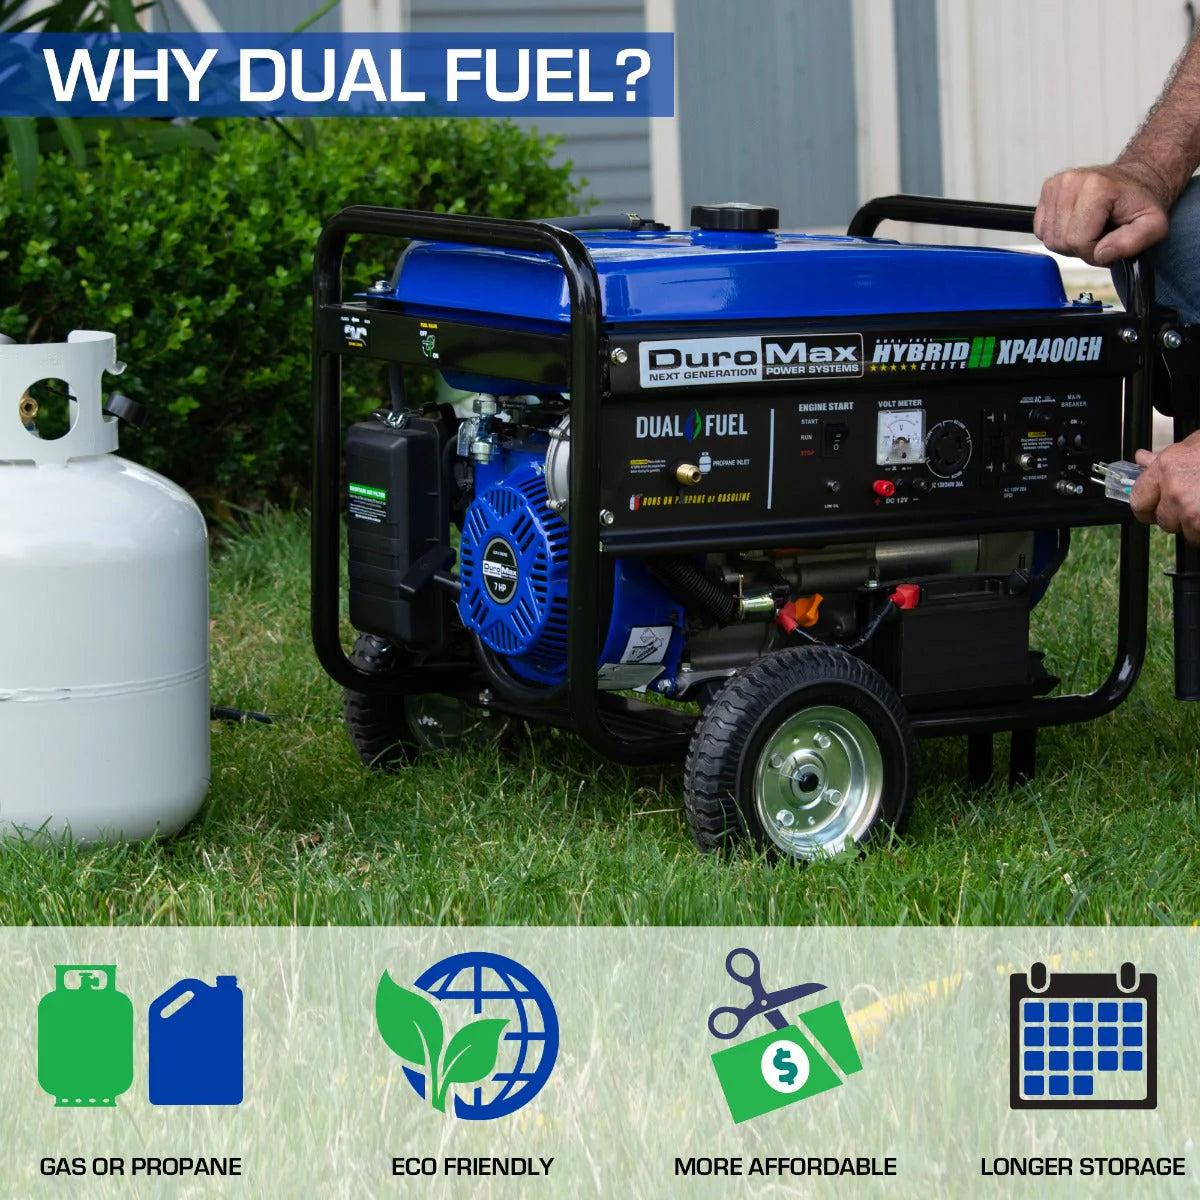 DuroMax XP4400EH 4,400-Watt/3,500-Watt 210cc Electric Start Dual Fuel Portable Generator